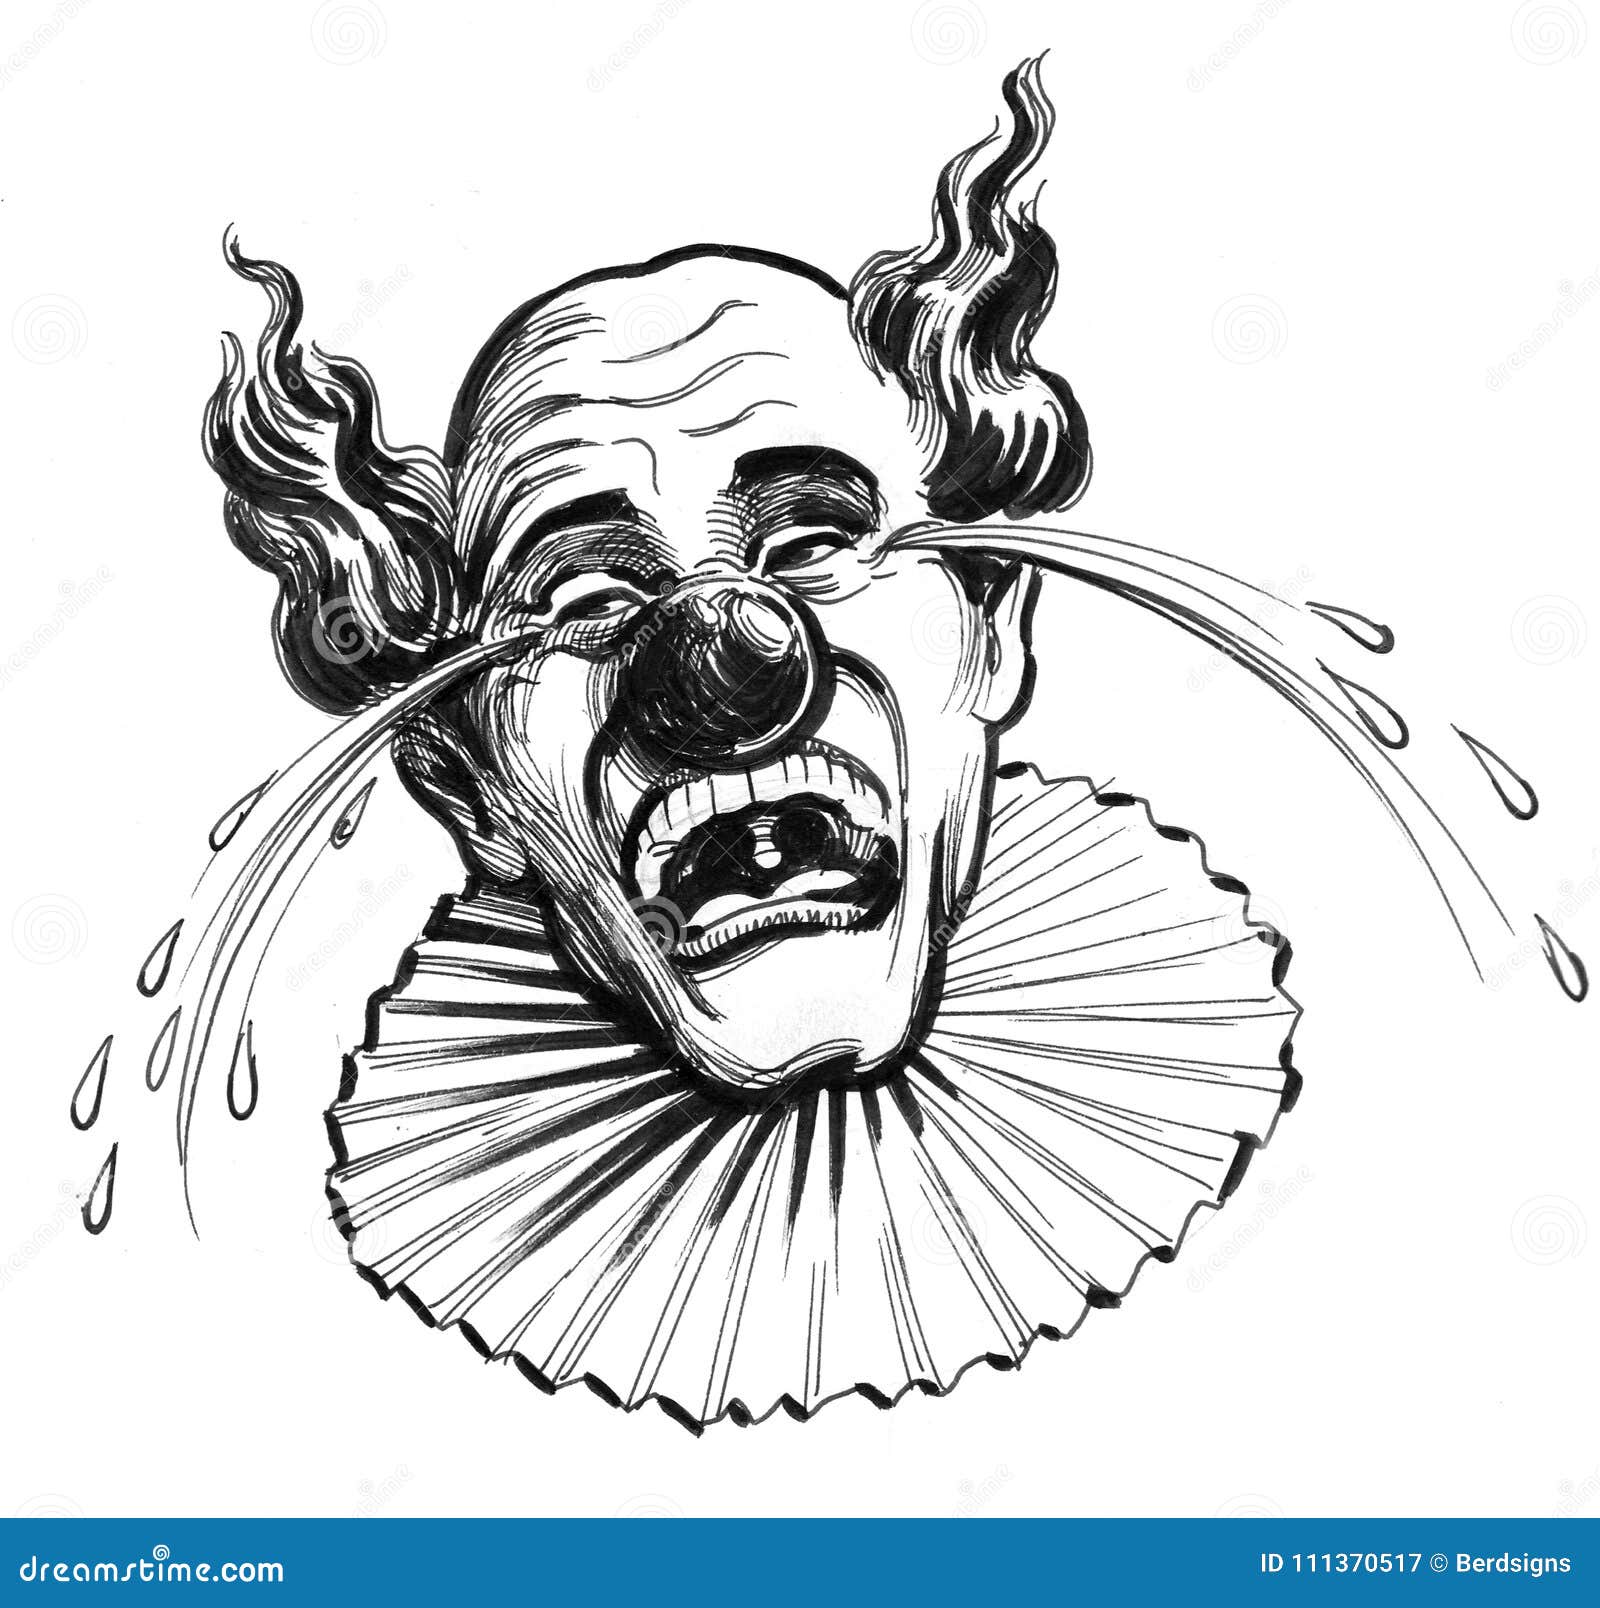 Crying clown stock illustration. Illustration of head - 111370517